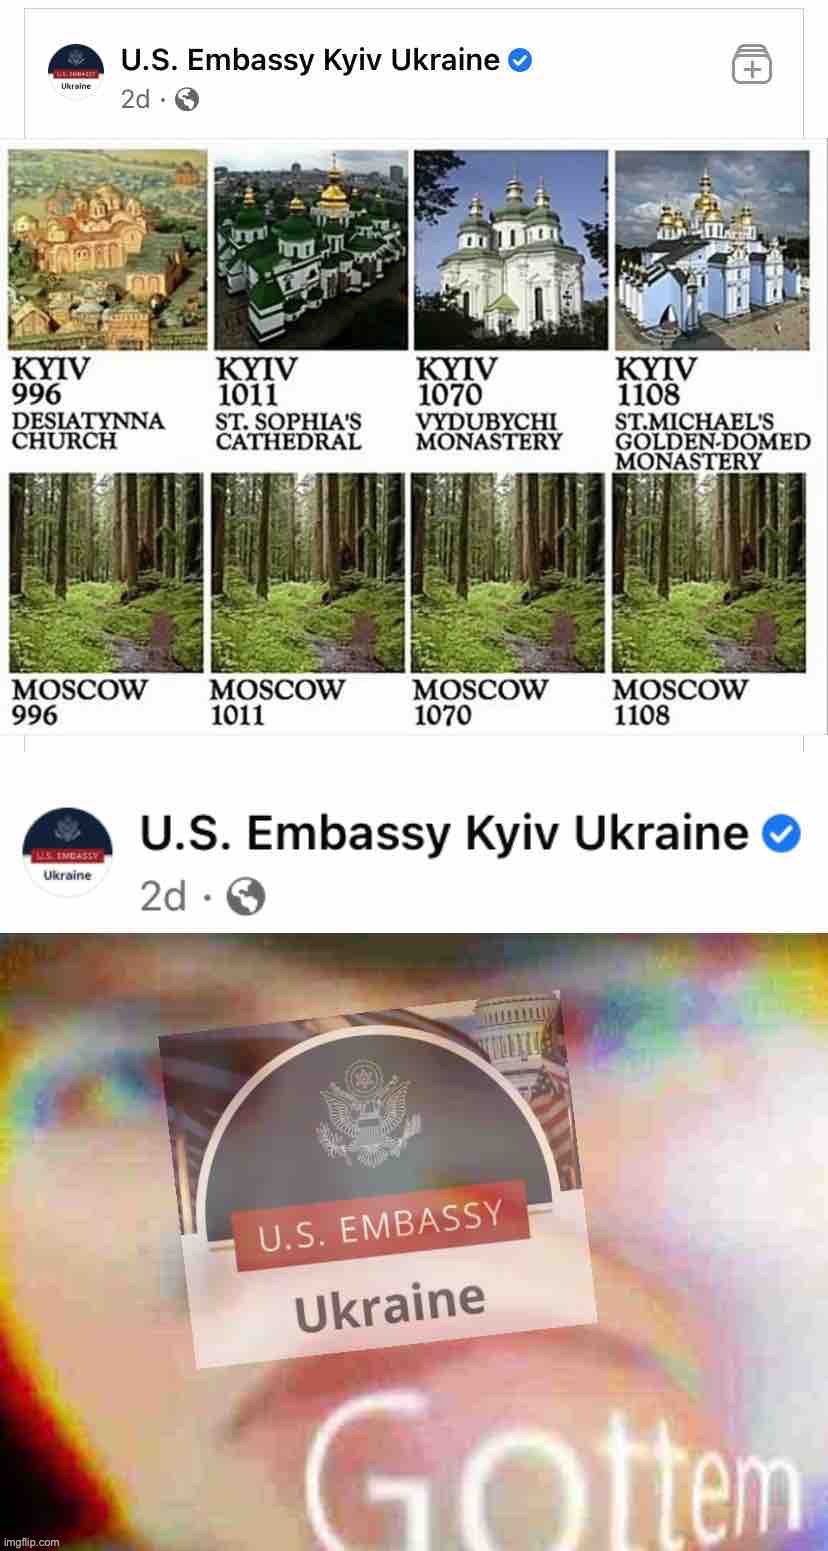 g o t t e m | image tagged in roasted by u s embassy,ukraine,russia,ukrainian,ukrainian lives matter,gottem | made w/ Imgflip meme maker